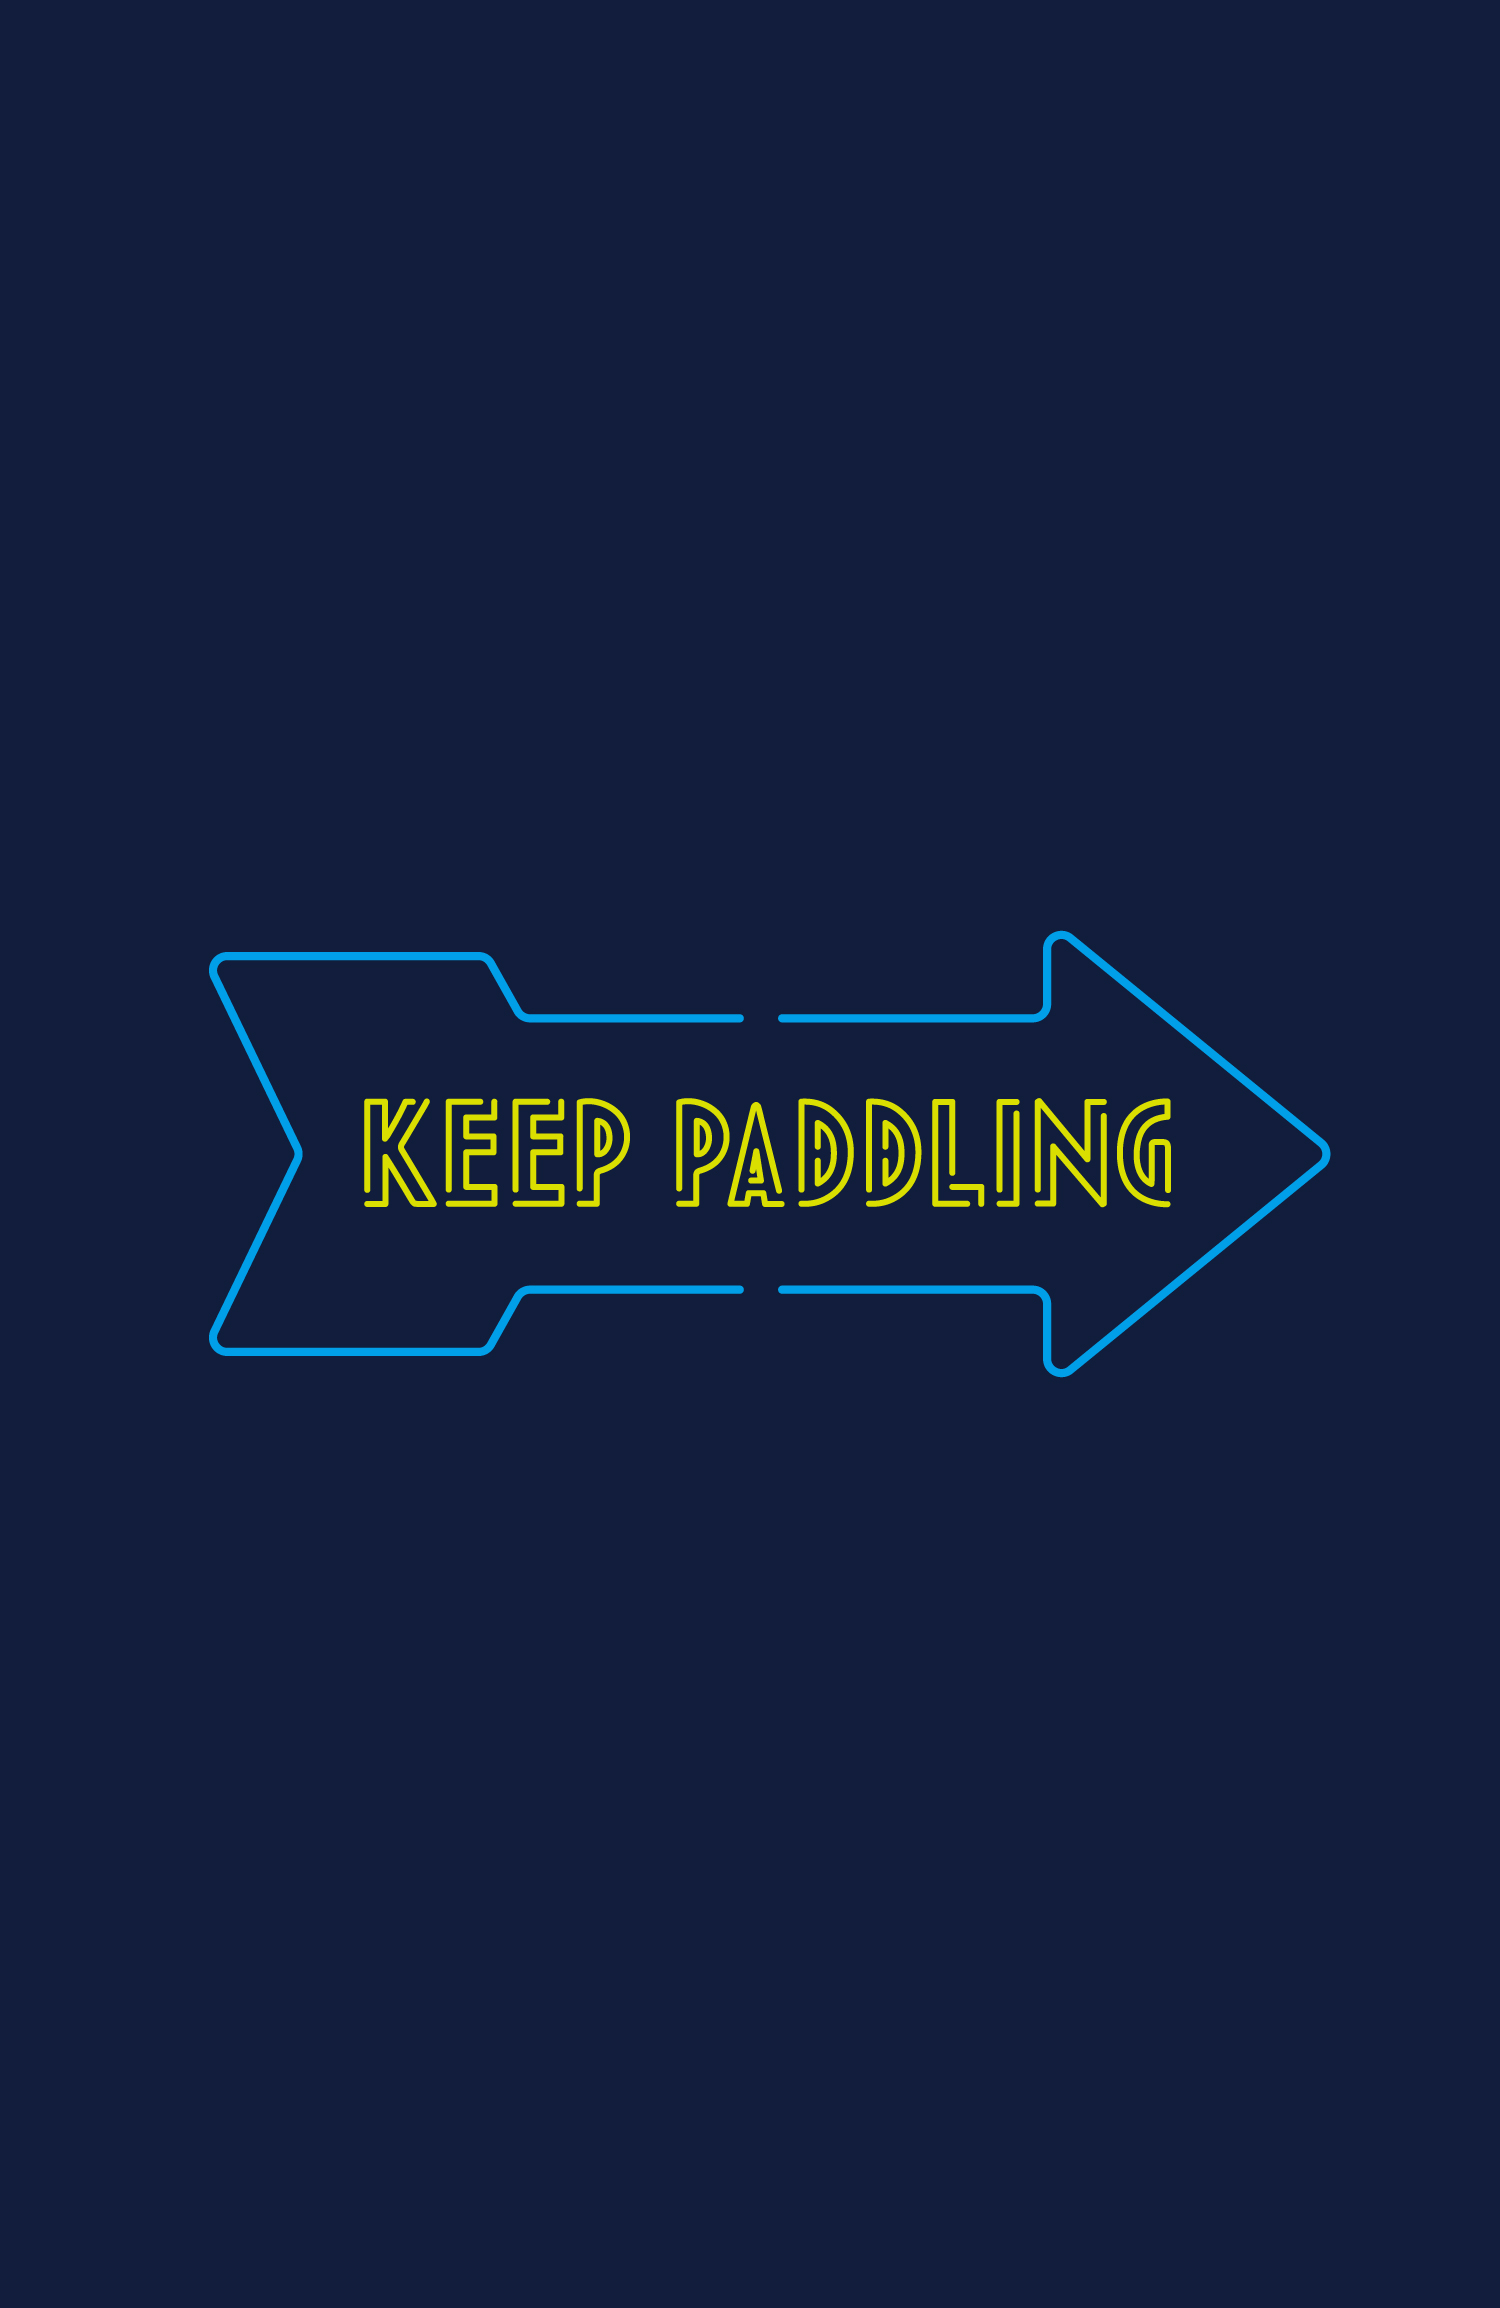 KEEP PADDLING